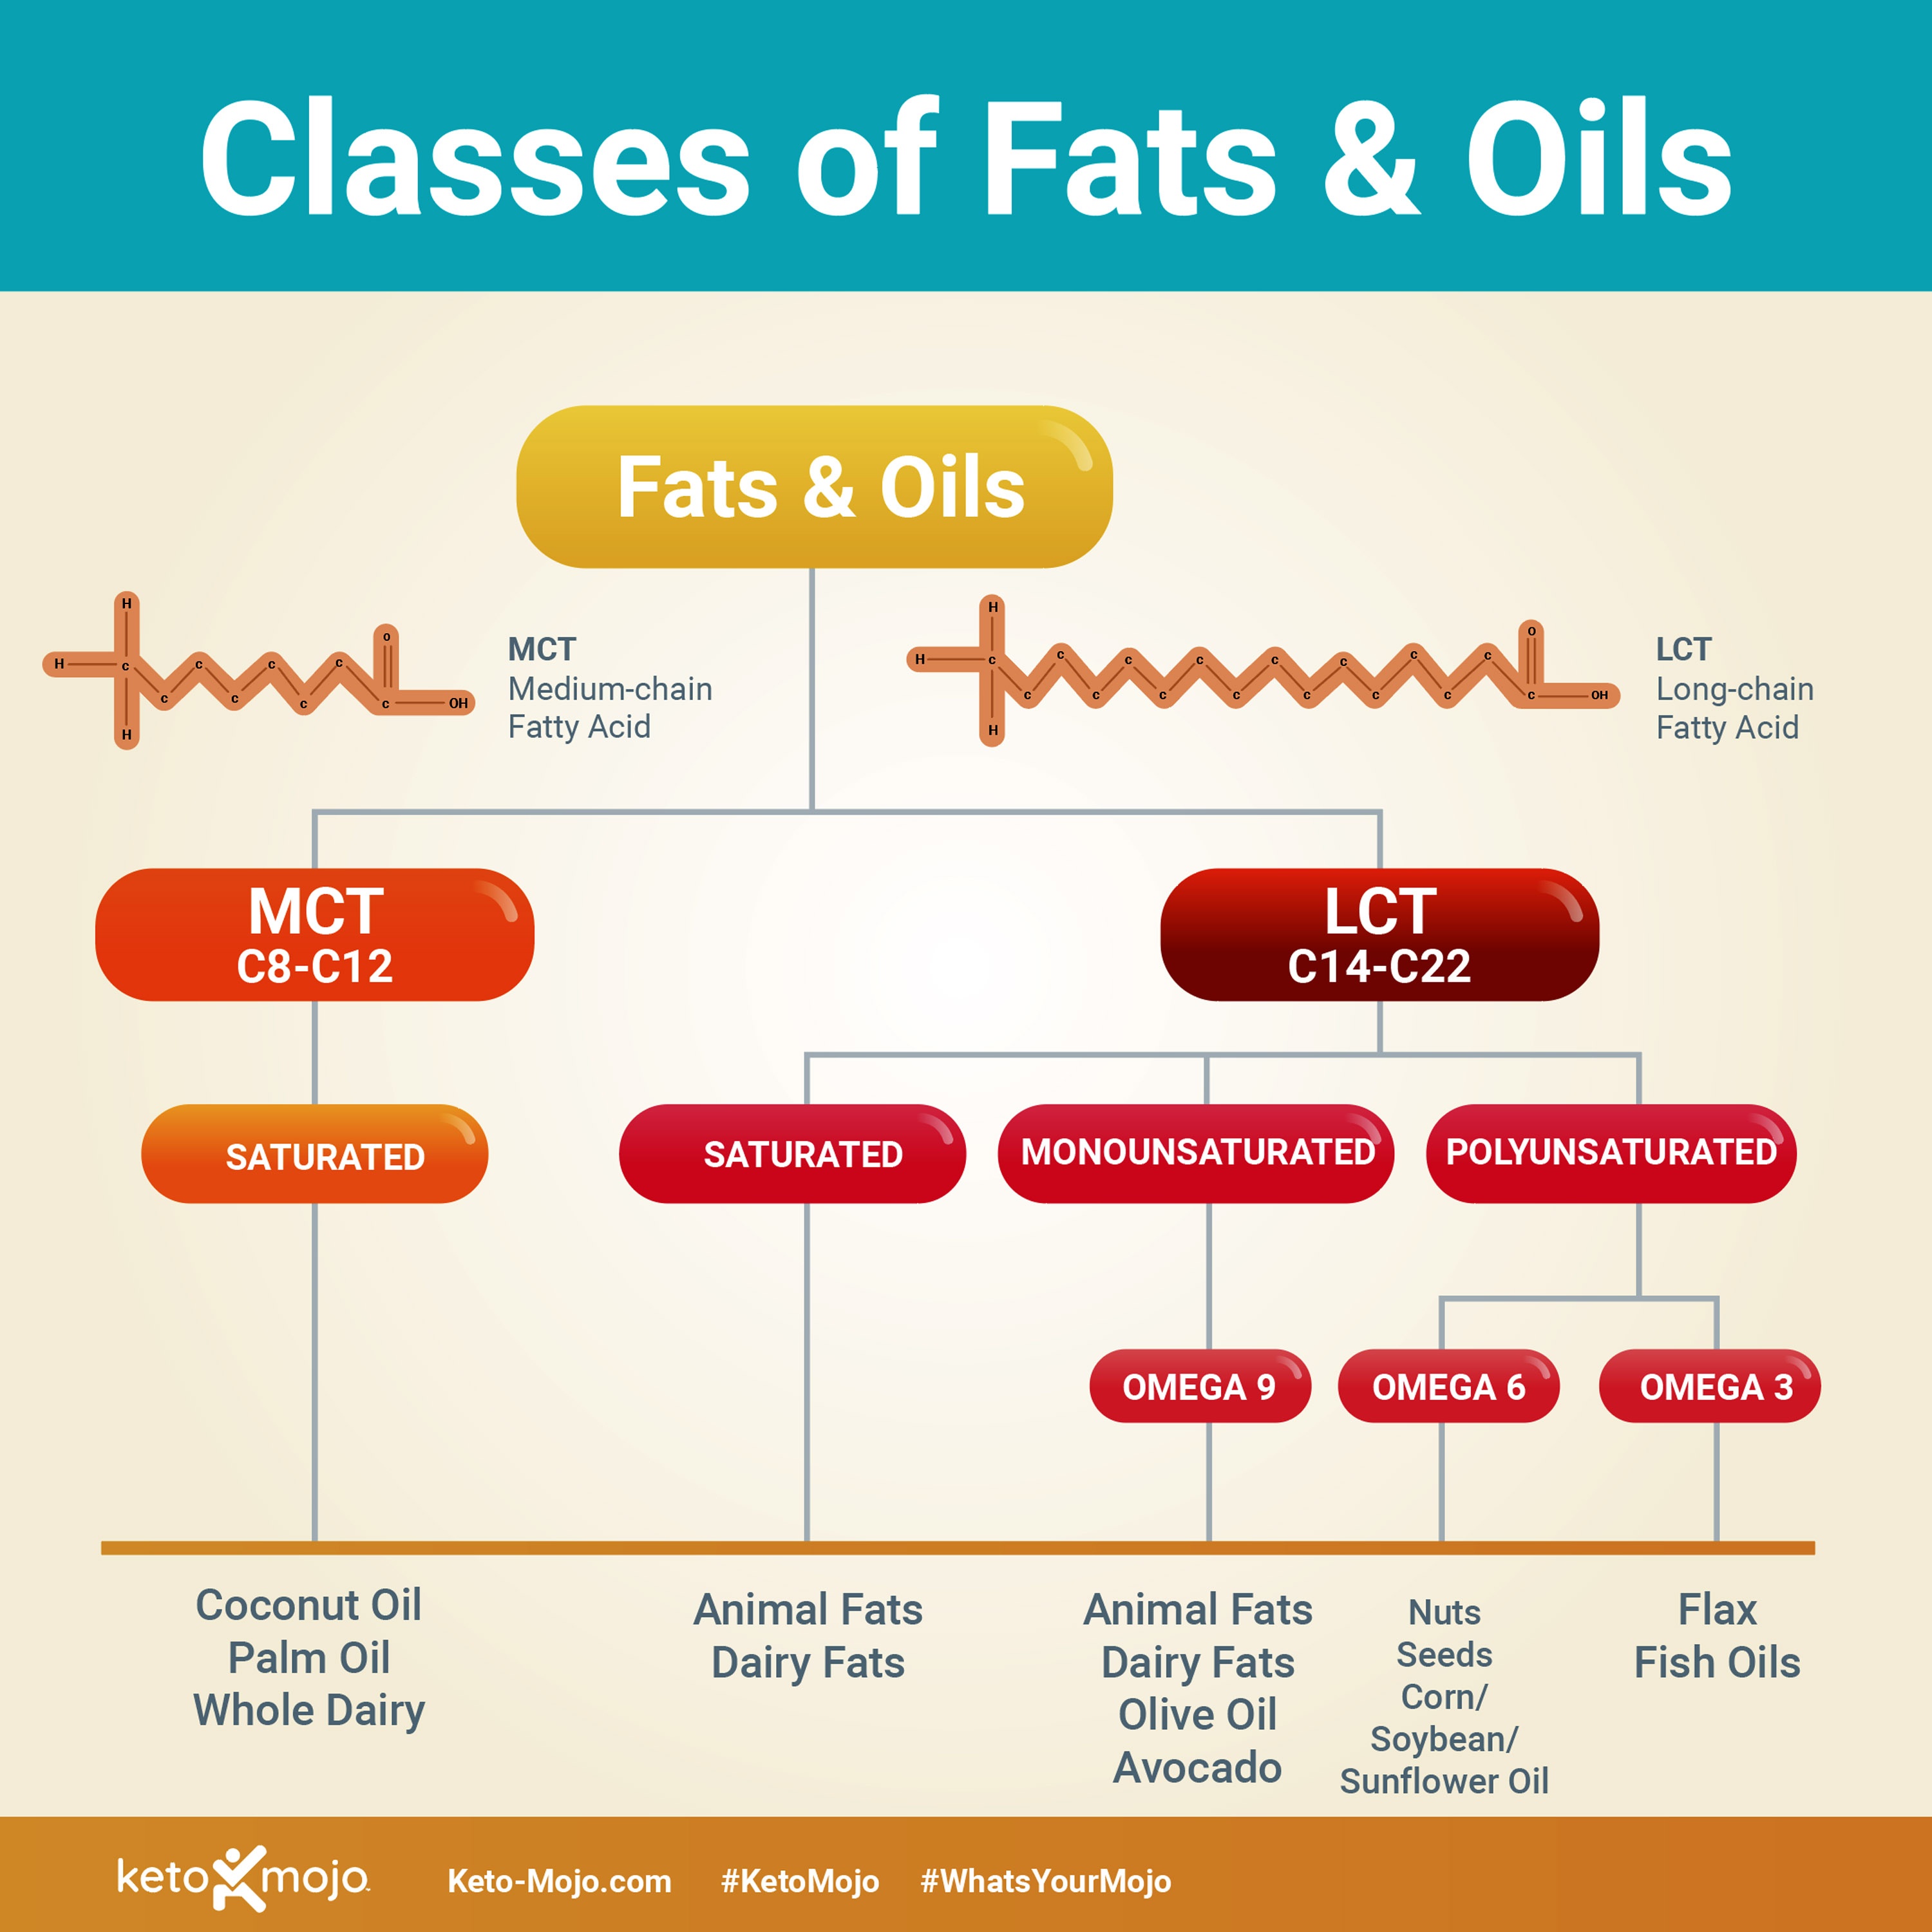 Keto-Mojo: Classes of fats and oils